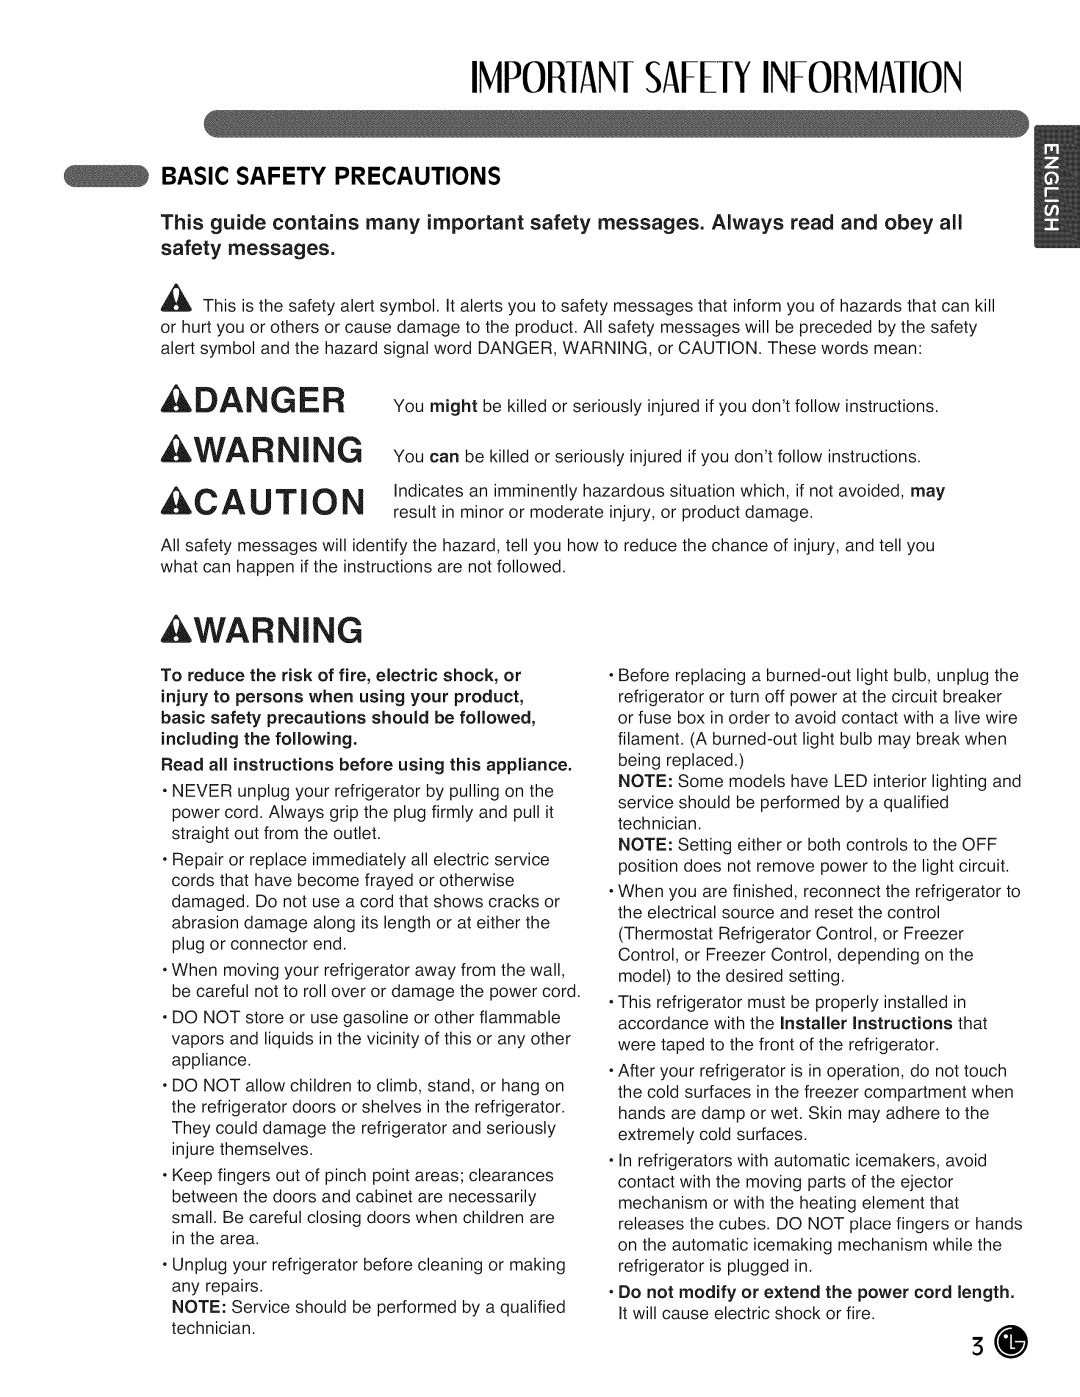 LG Electronics LMX28988 manual IMPORIAN!SAFELYINFORMAIlON, Danger, Caution, Basic Safety Precautions 